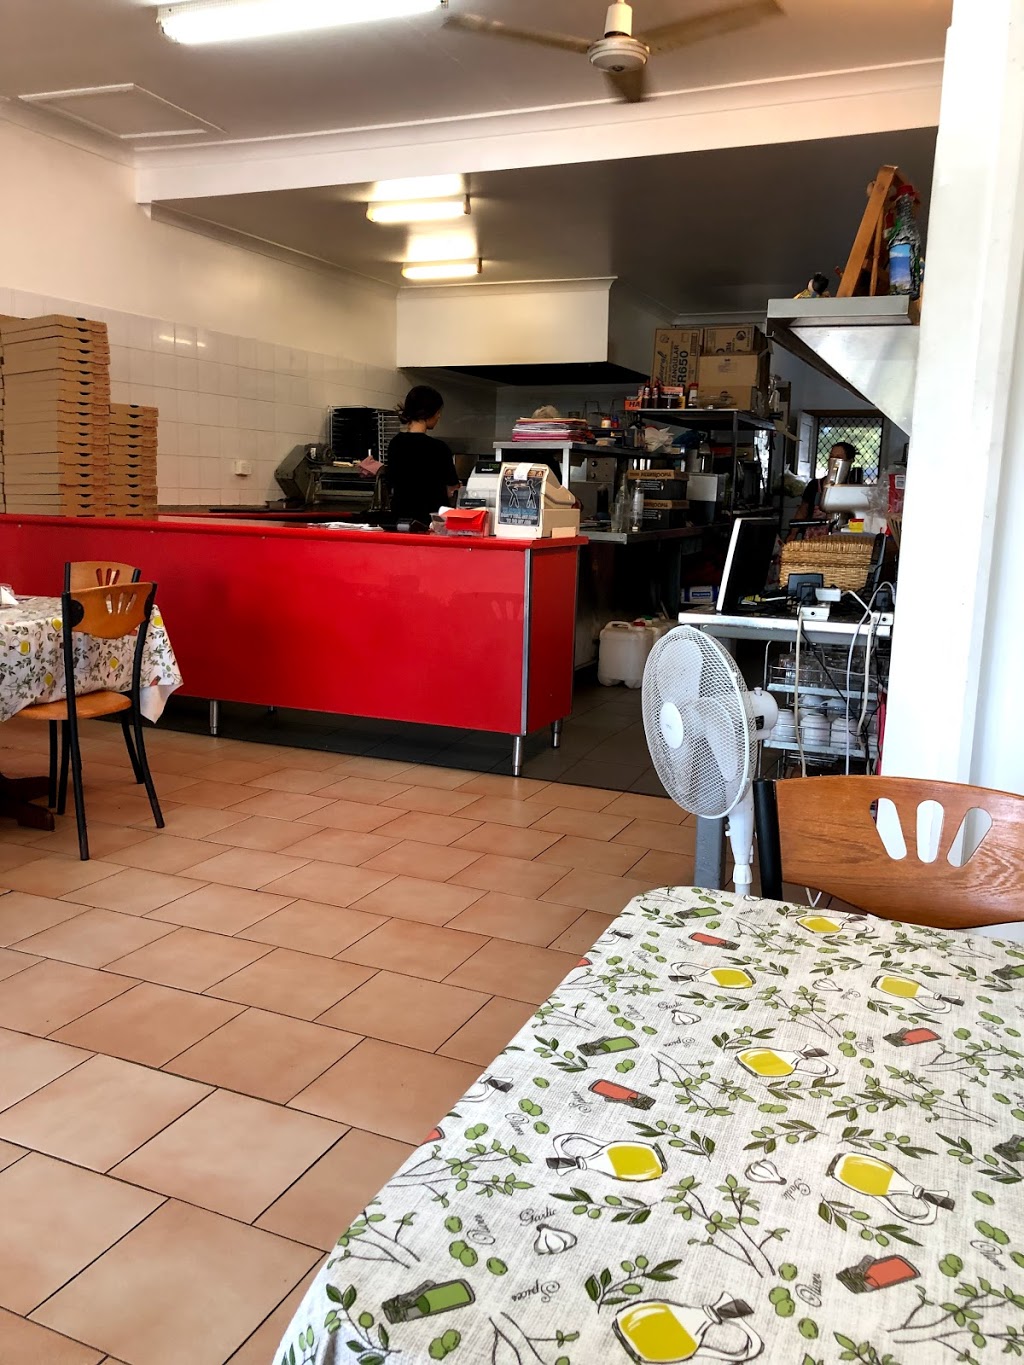 Julios Pizza Dapto | restaurant | 76 Byamee St, Dapto NSW 2530, Australia | 0242613698 OR +61 2 4261 3698